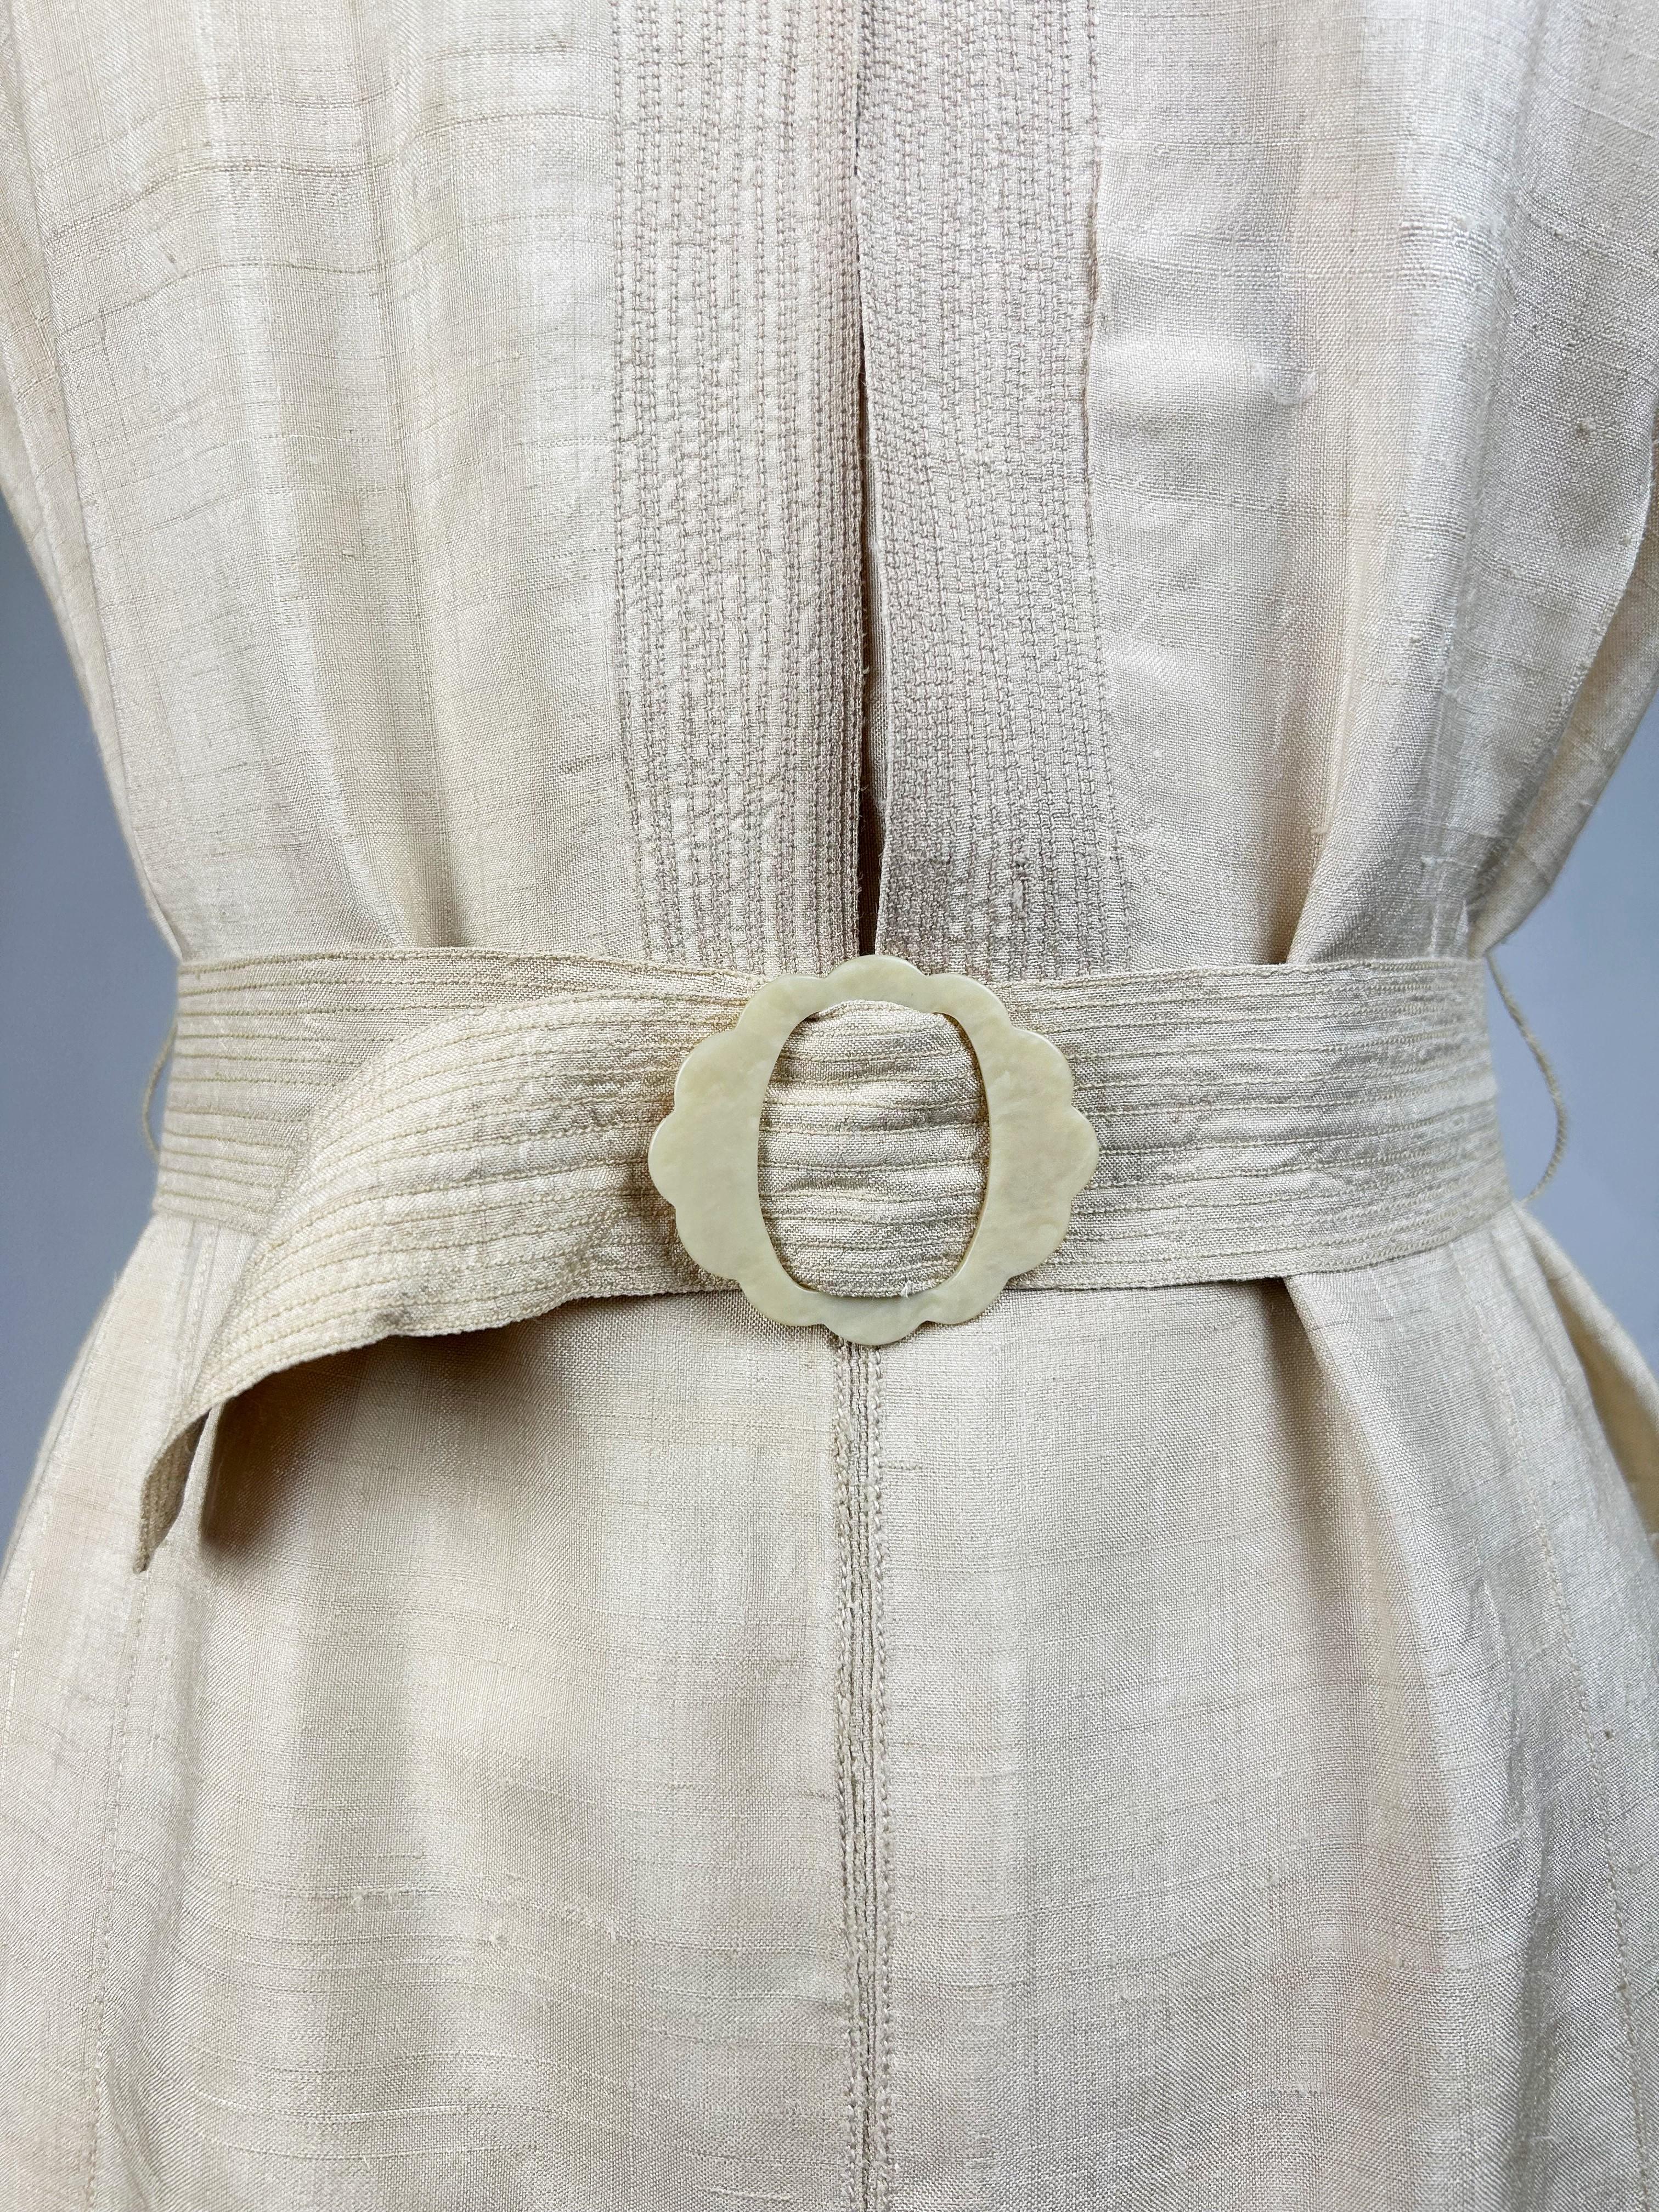 Unbleached wild silk summer dress - France Circa 1930-1940 For Sale 6